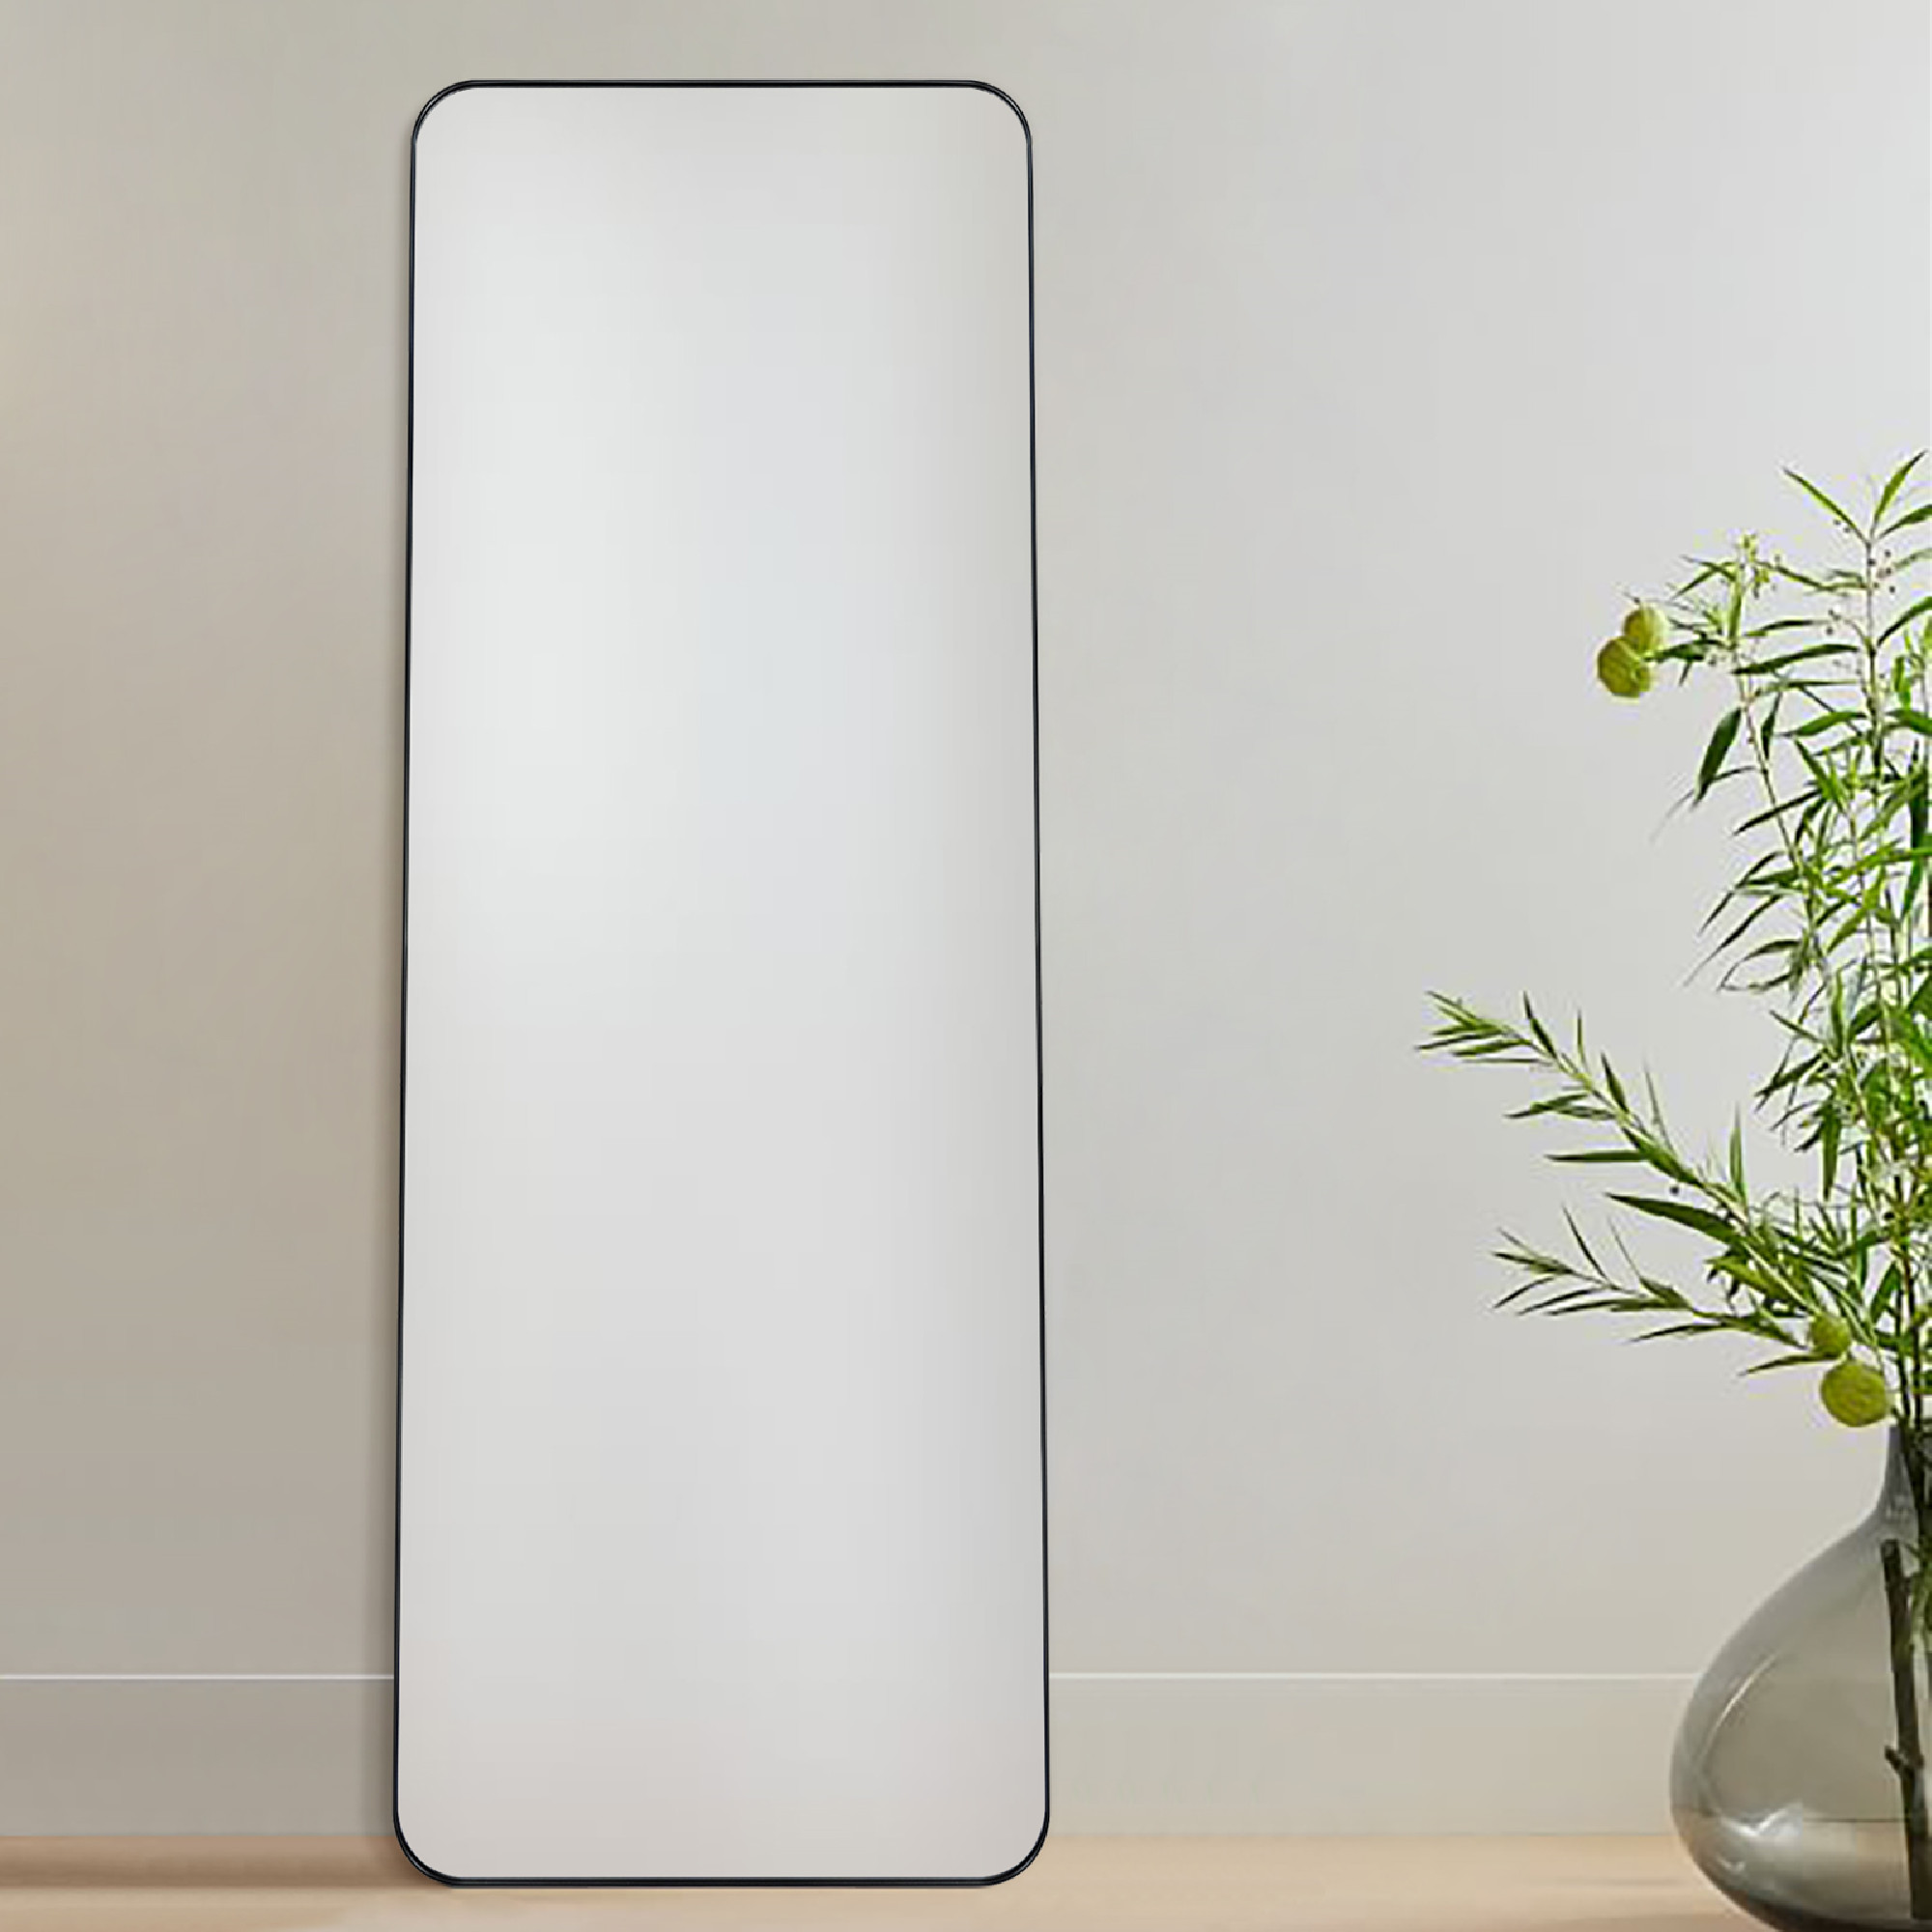 Kengston Modern & Contemporary Rectangular Bathroom Vanity Mirrors-22x55-Brushed Nickel